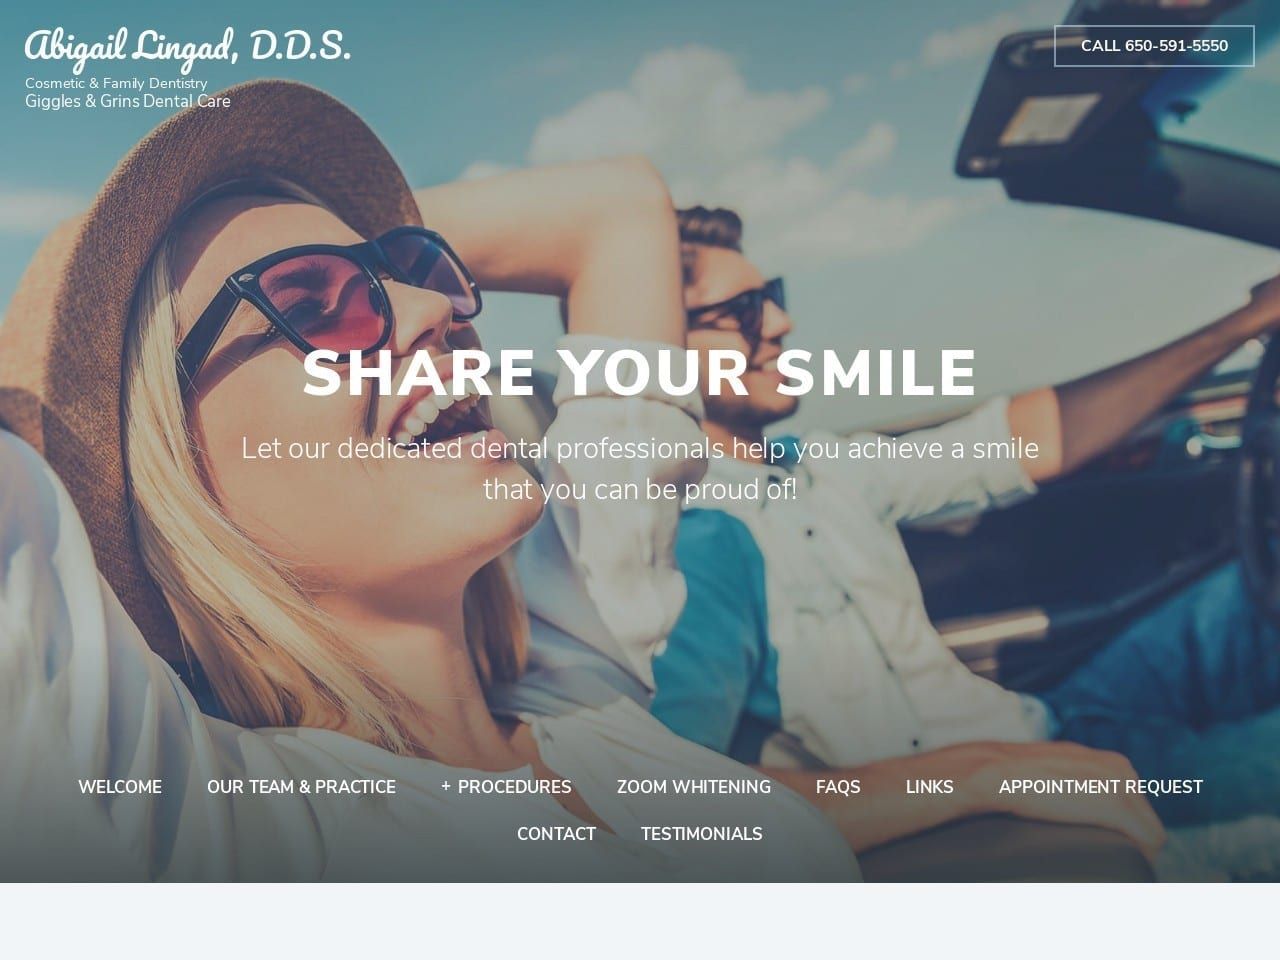 Abigail Lingad DDS Website Screenshot from smilesbydoctorabby.com